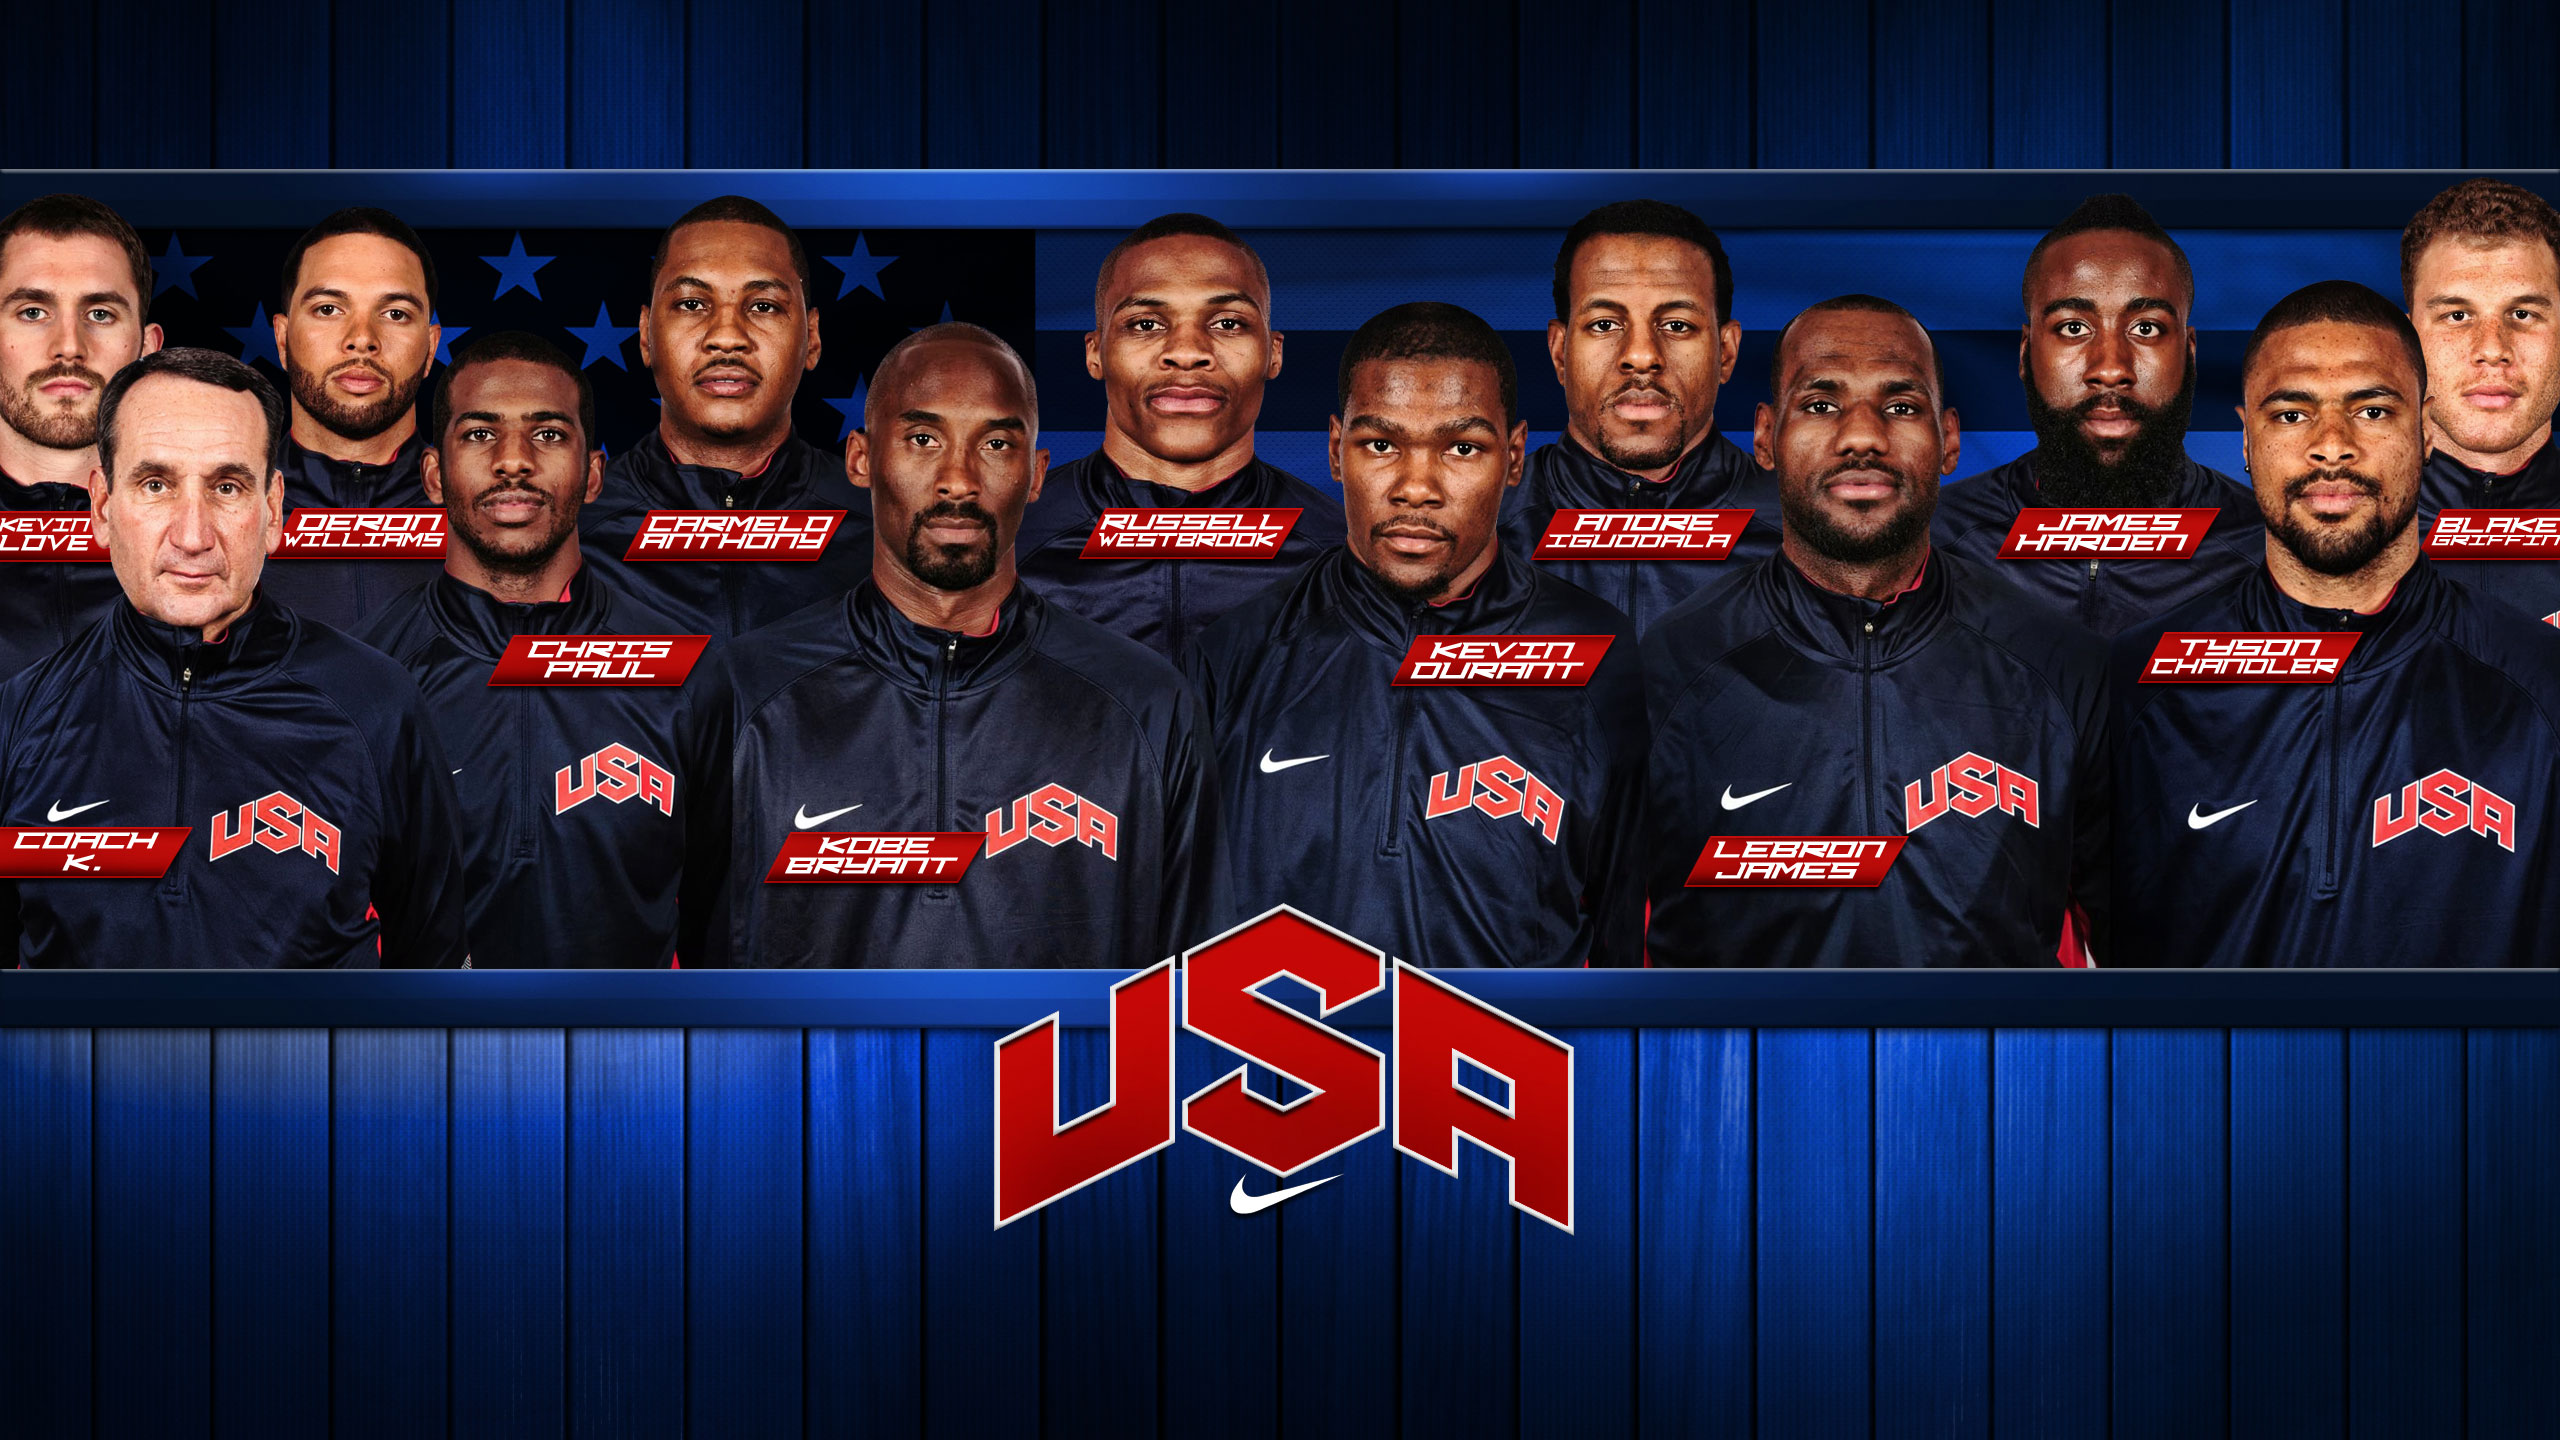 USA Dream Team 2012 Roster 2560×1440 Wallpaper